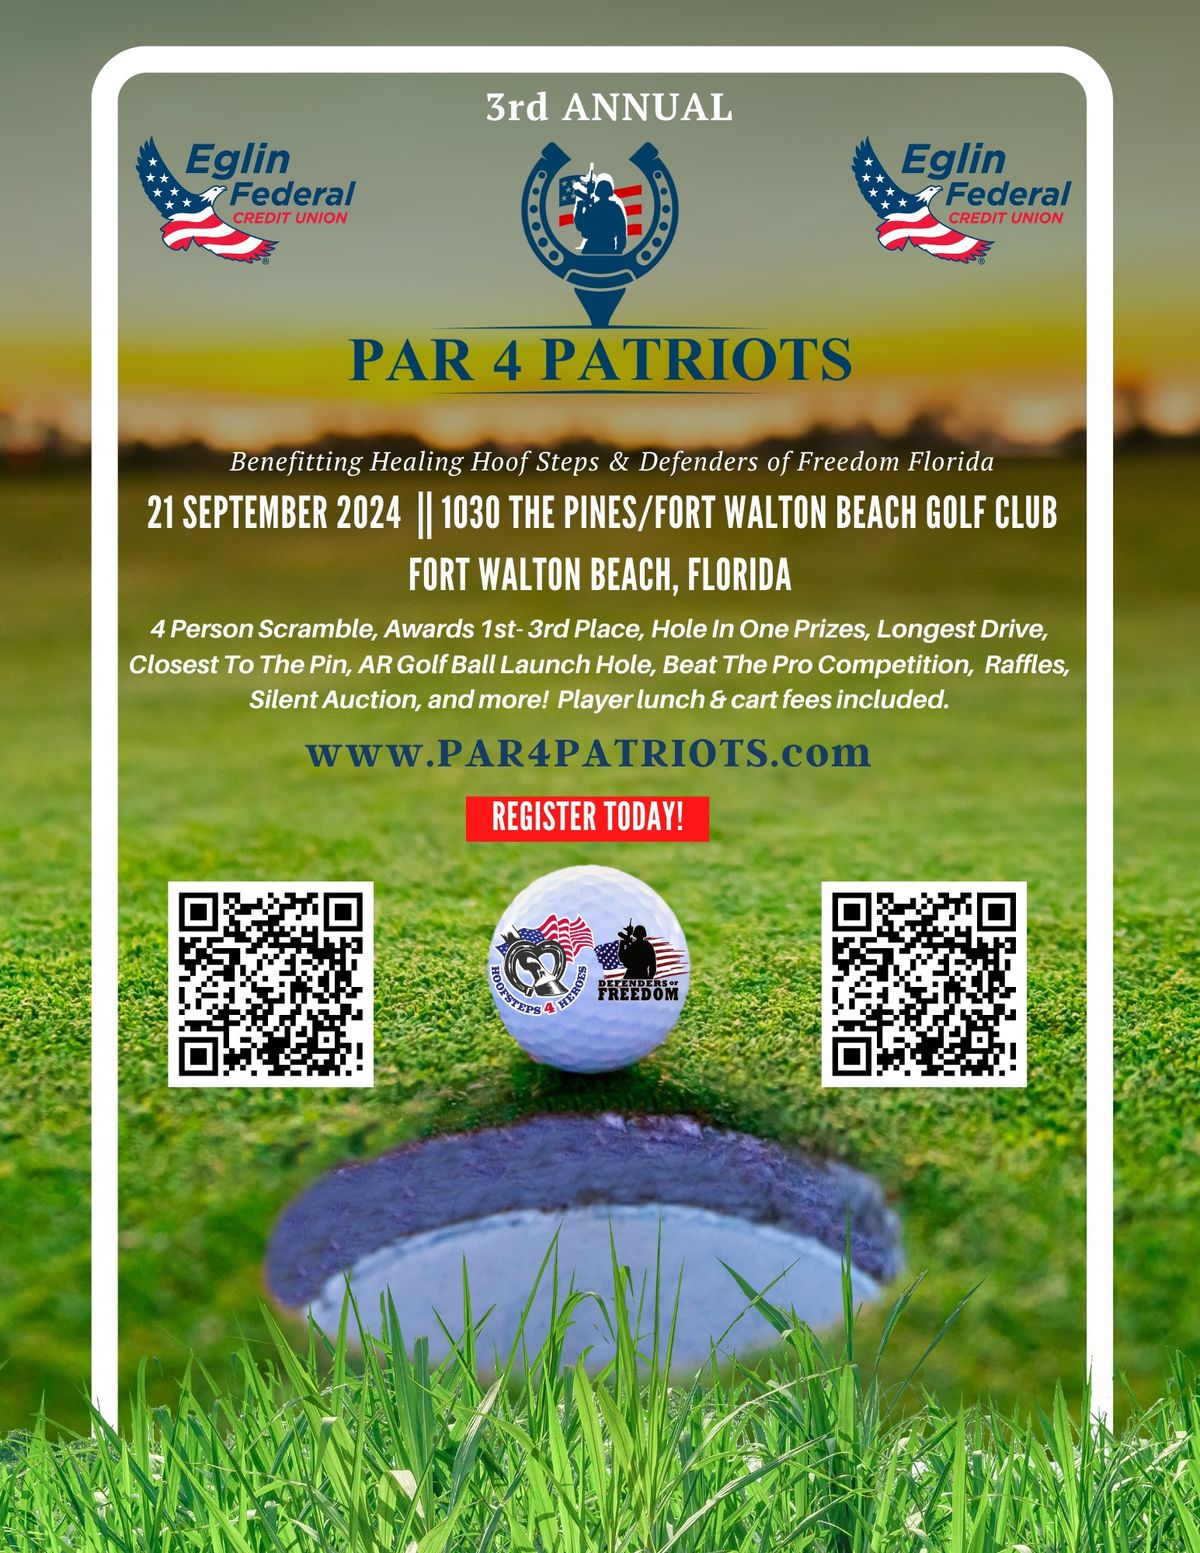 3rd Annual PAR 4 PATRIOTS Charity Golf Tournament